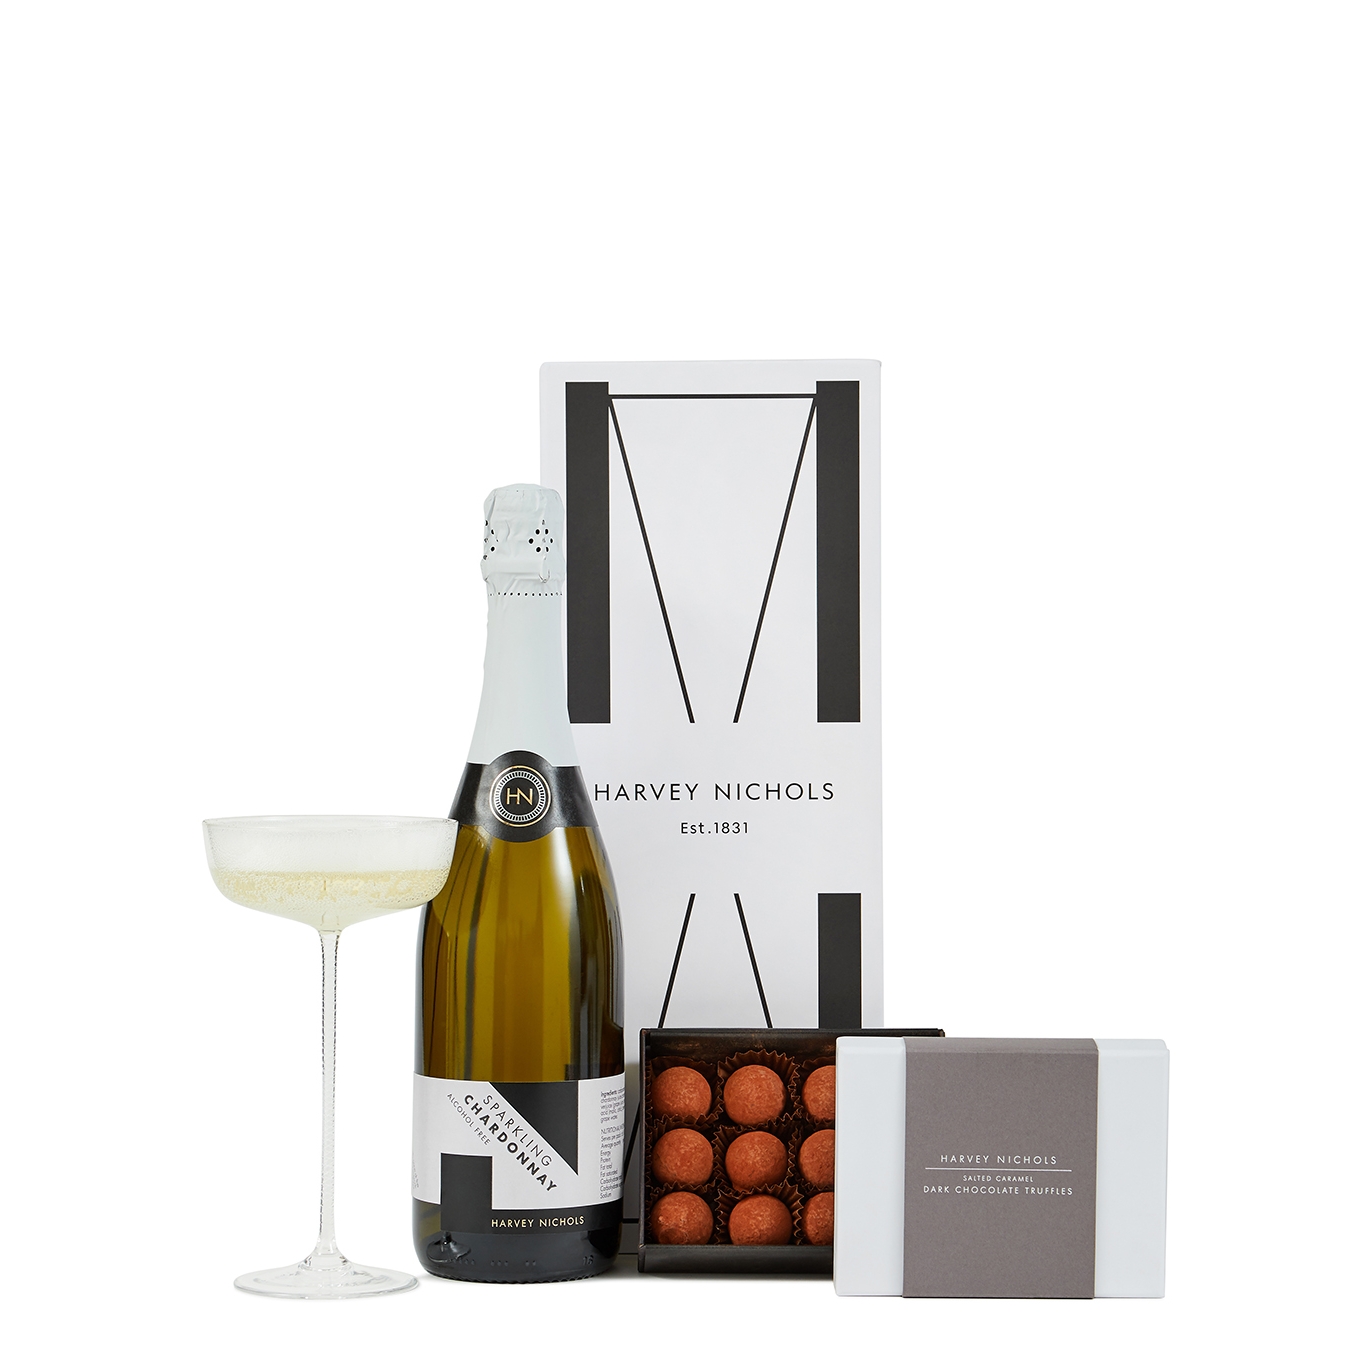 Harvey Nichols Chardonnay & Salted Caramel Truffle, Gift, Alcohol-Free Sparkling Wine